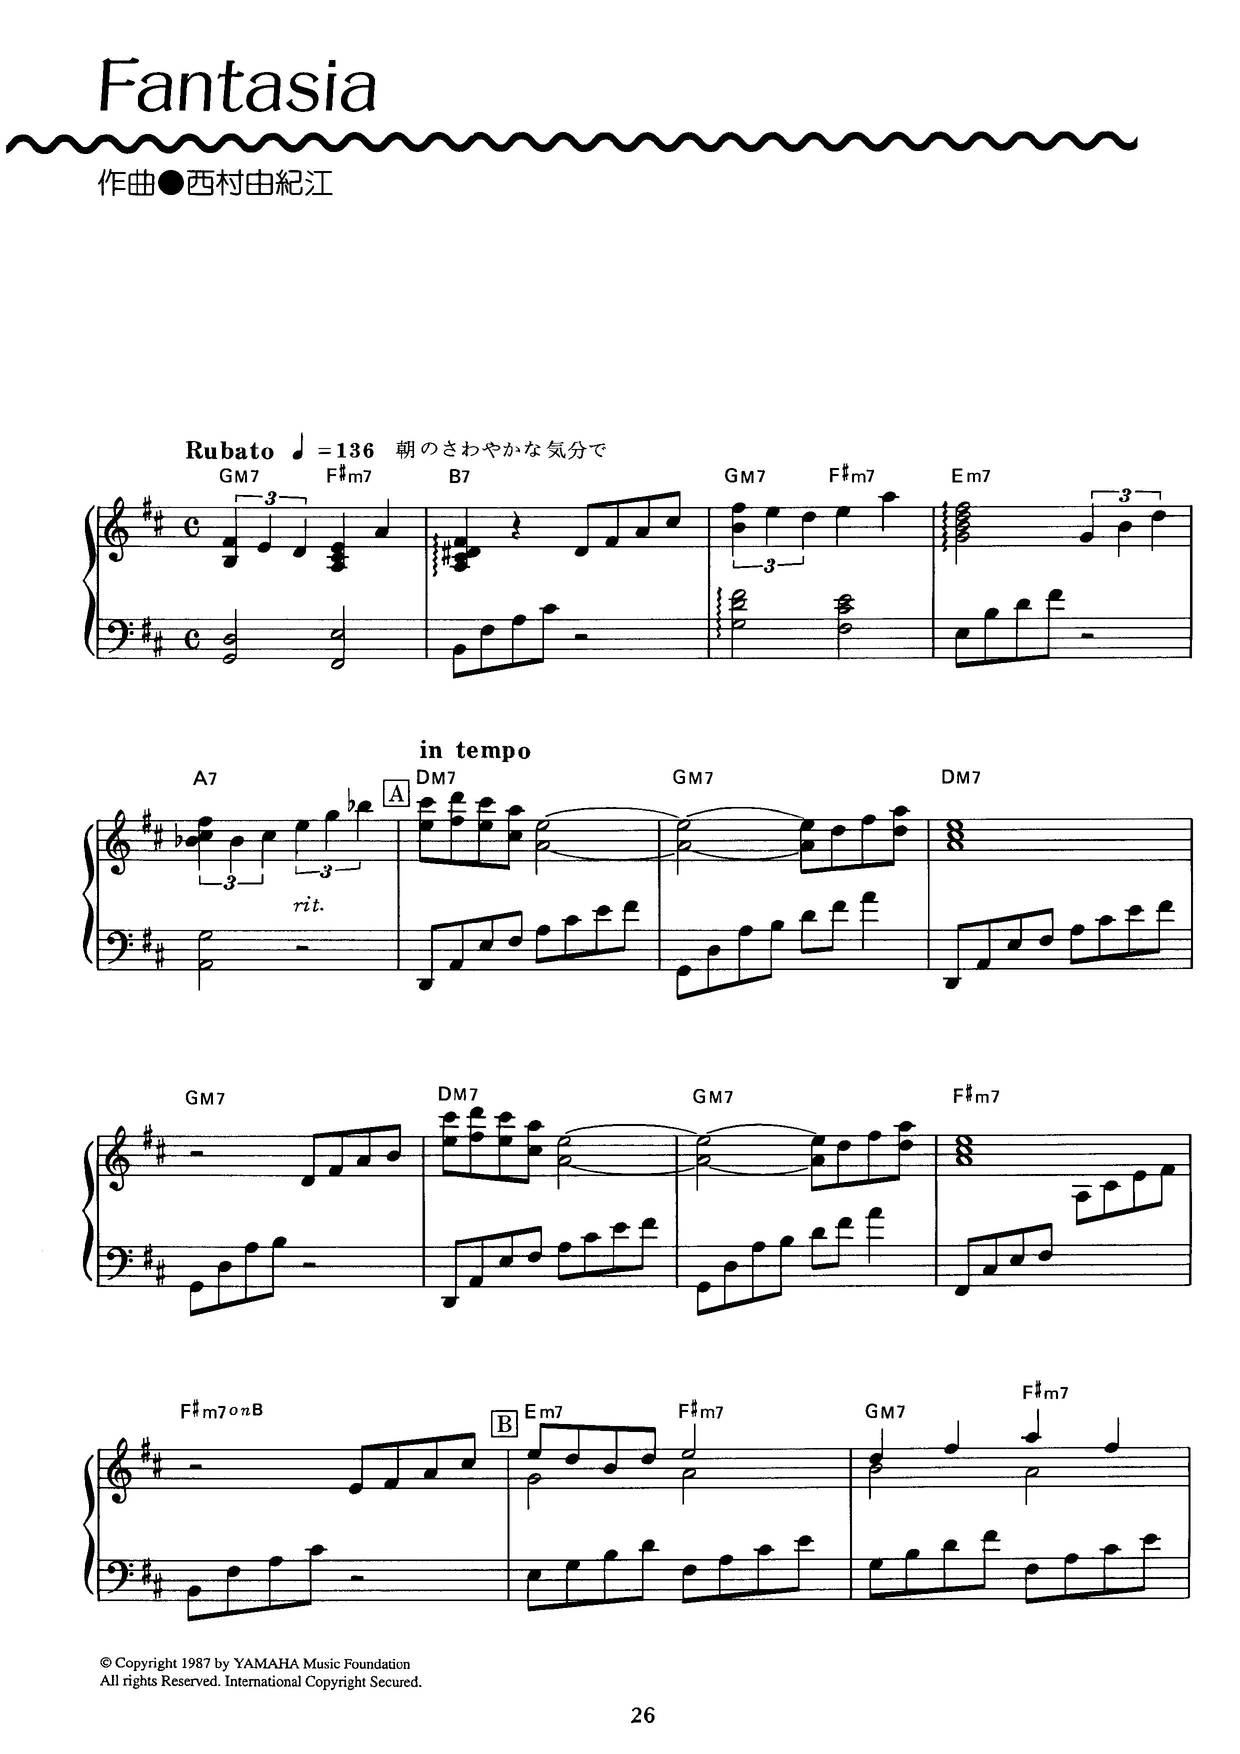 Fantasiaピアノ譜